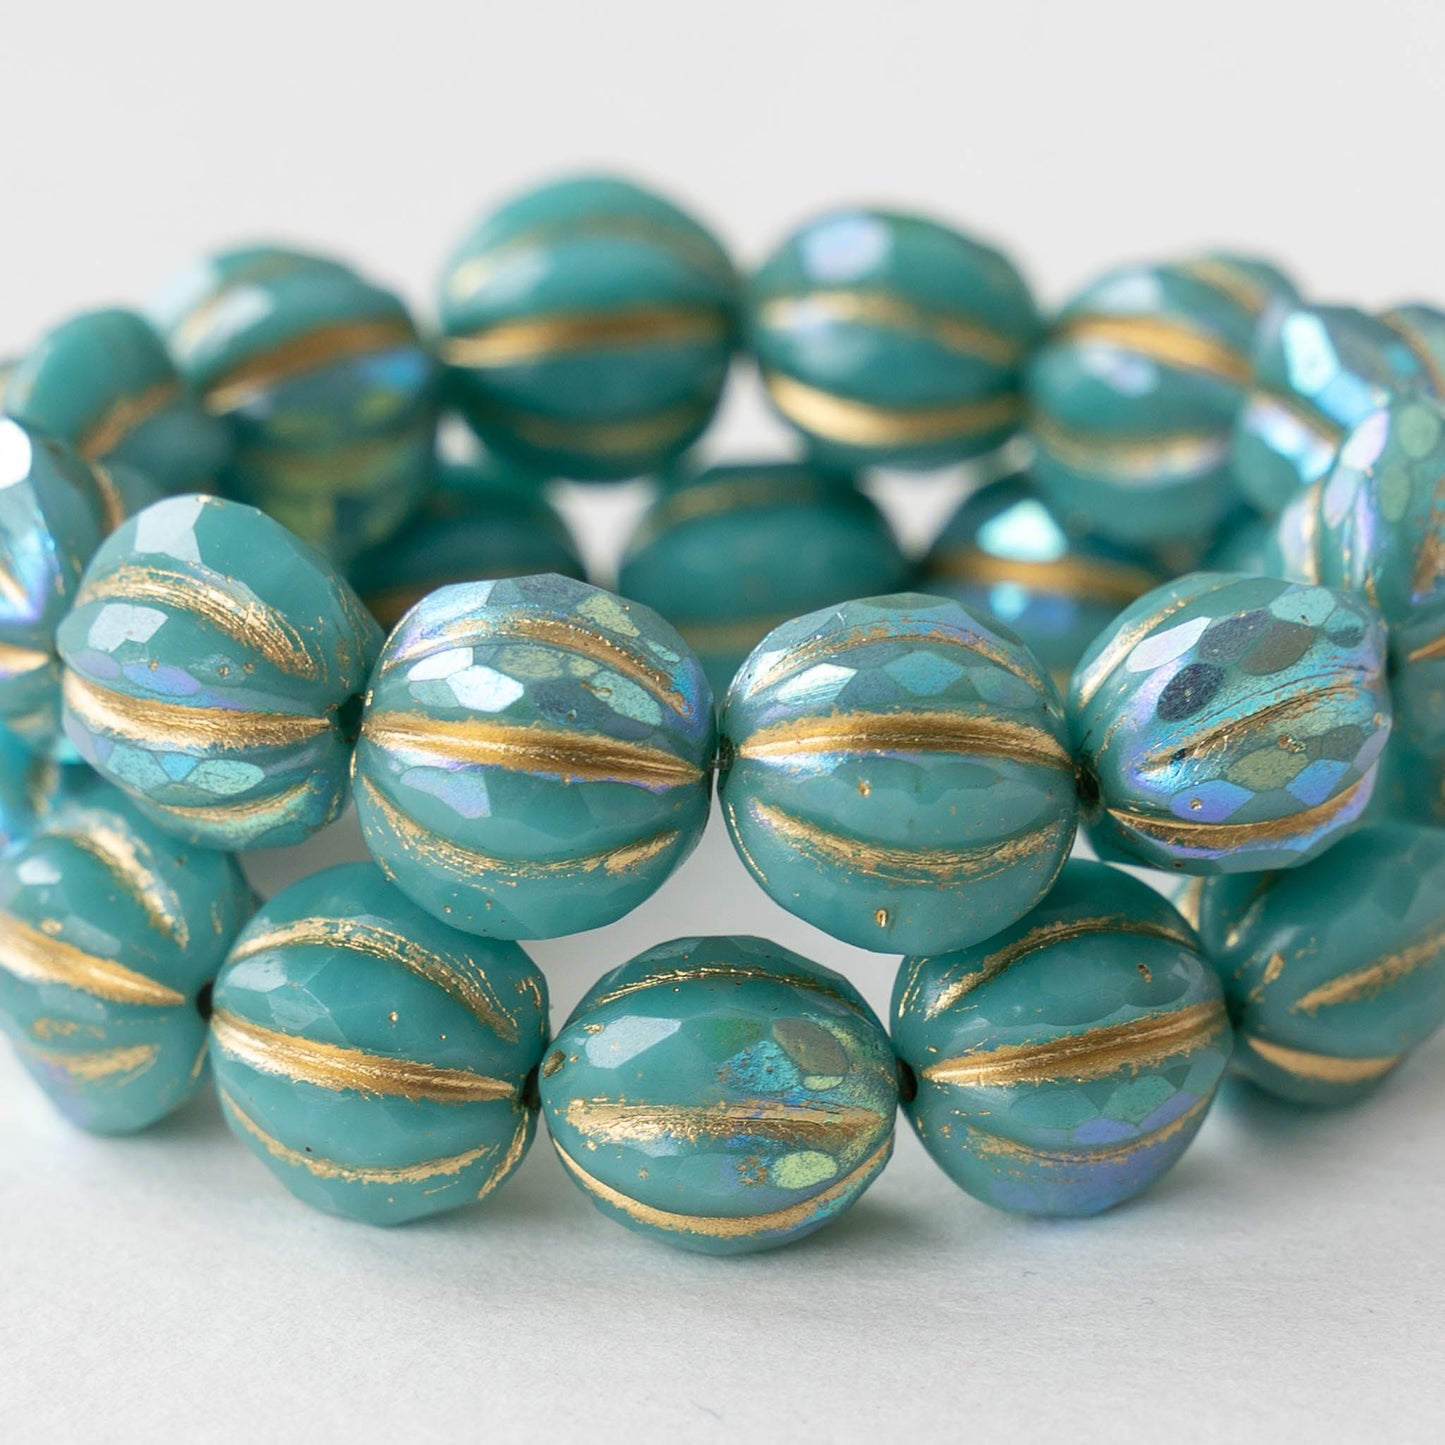 12mm Glass Cat Beads - Blue Mix with Aqua Wash - 10 Beads – funkyprettybeads